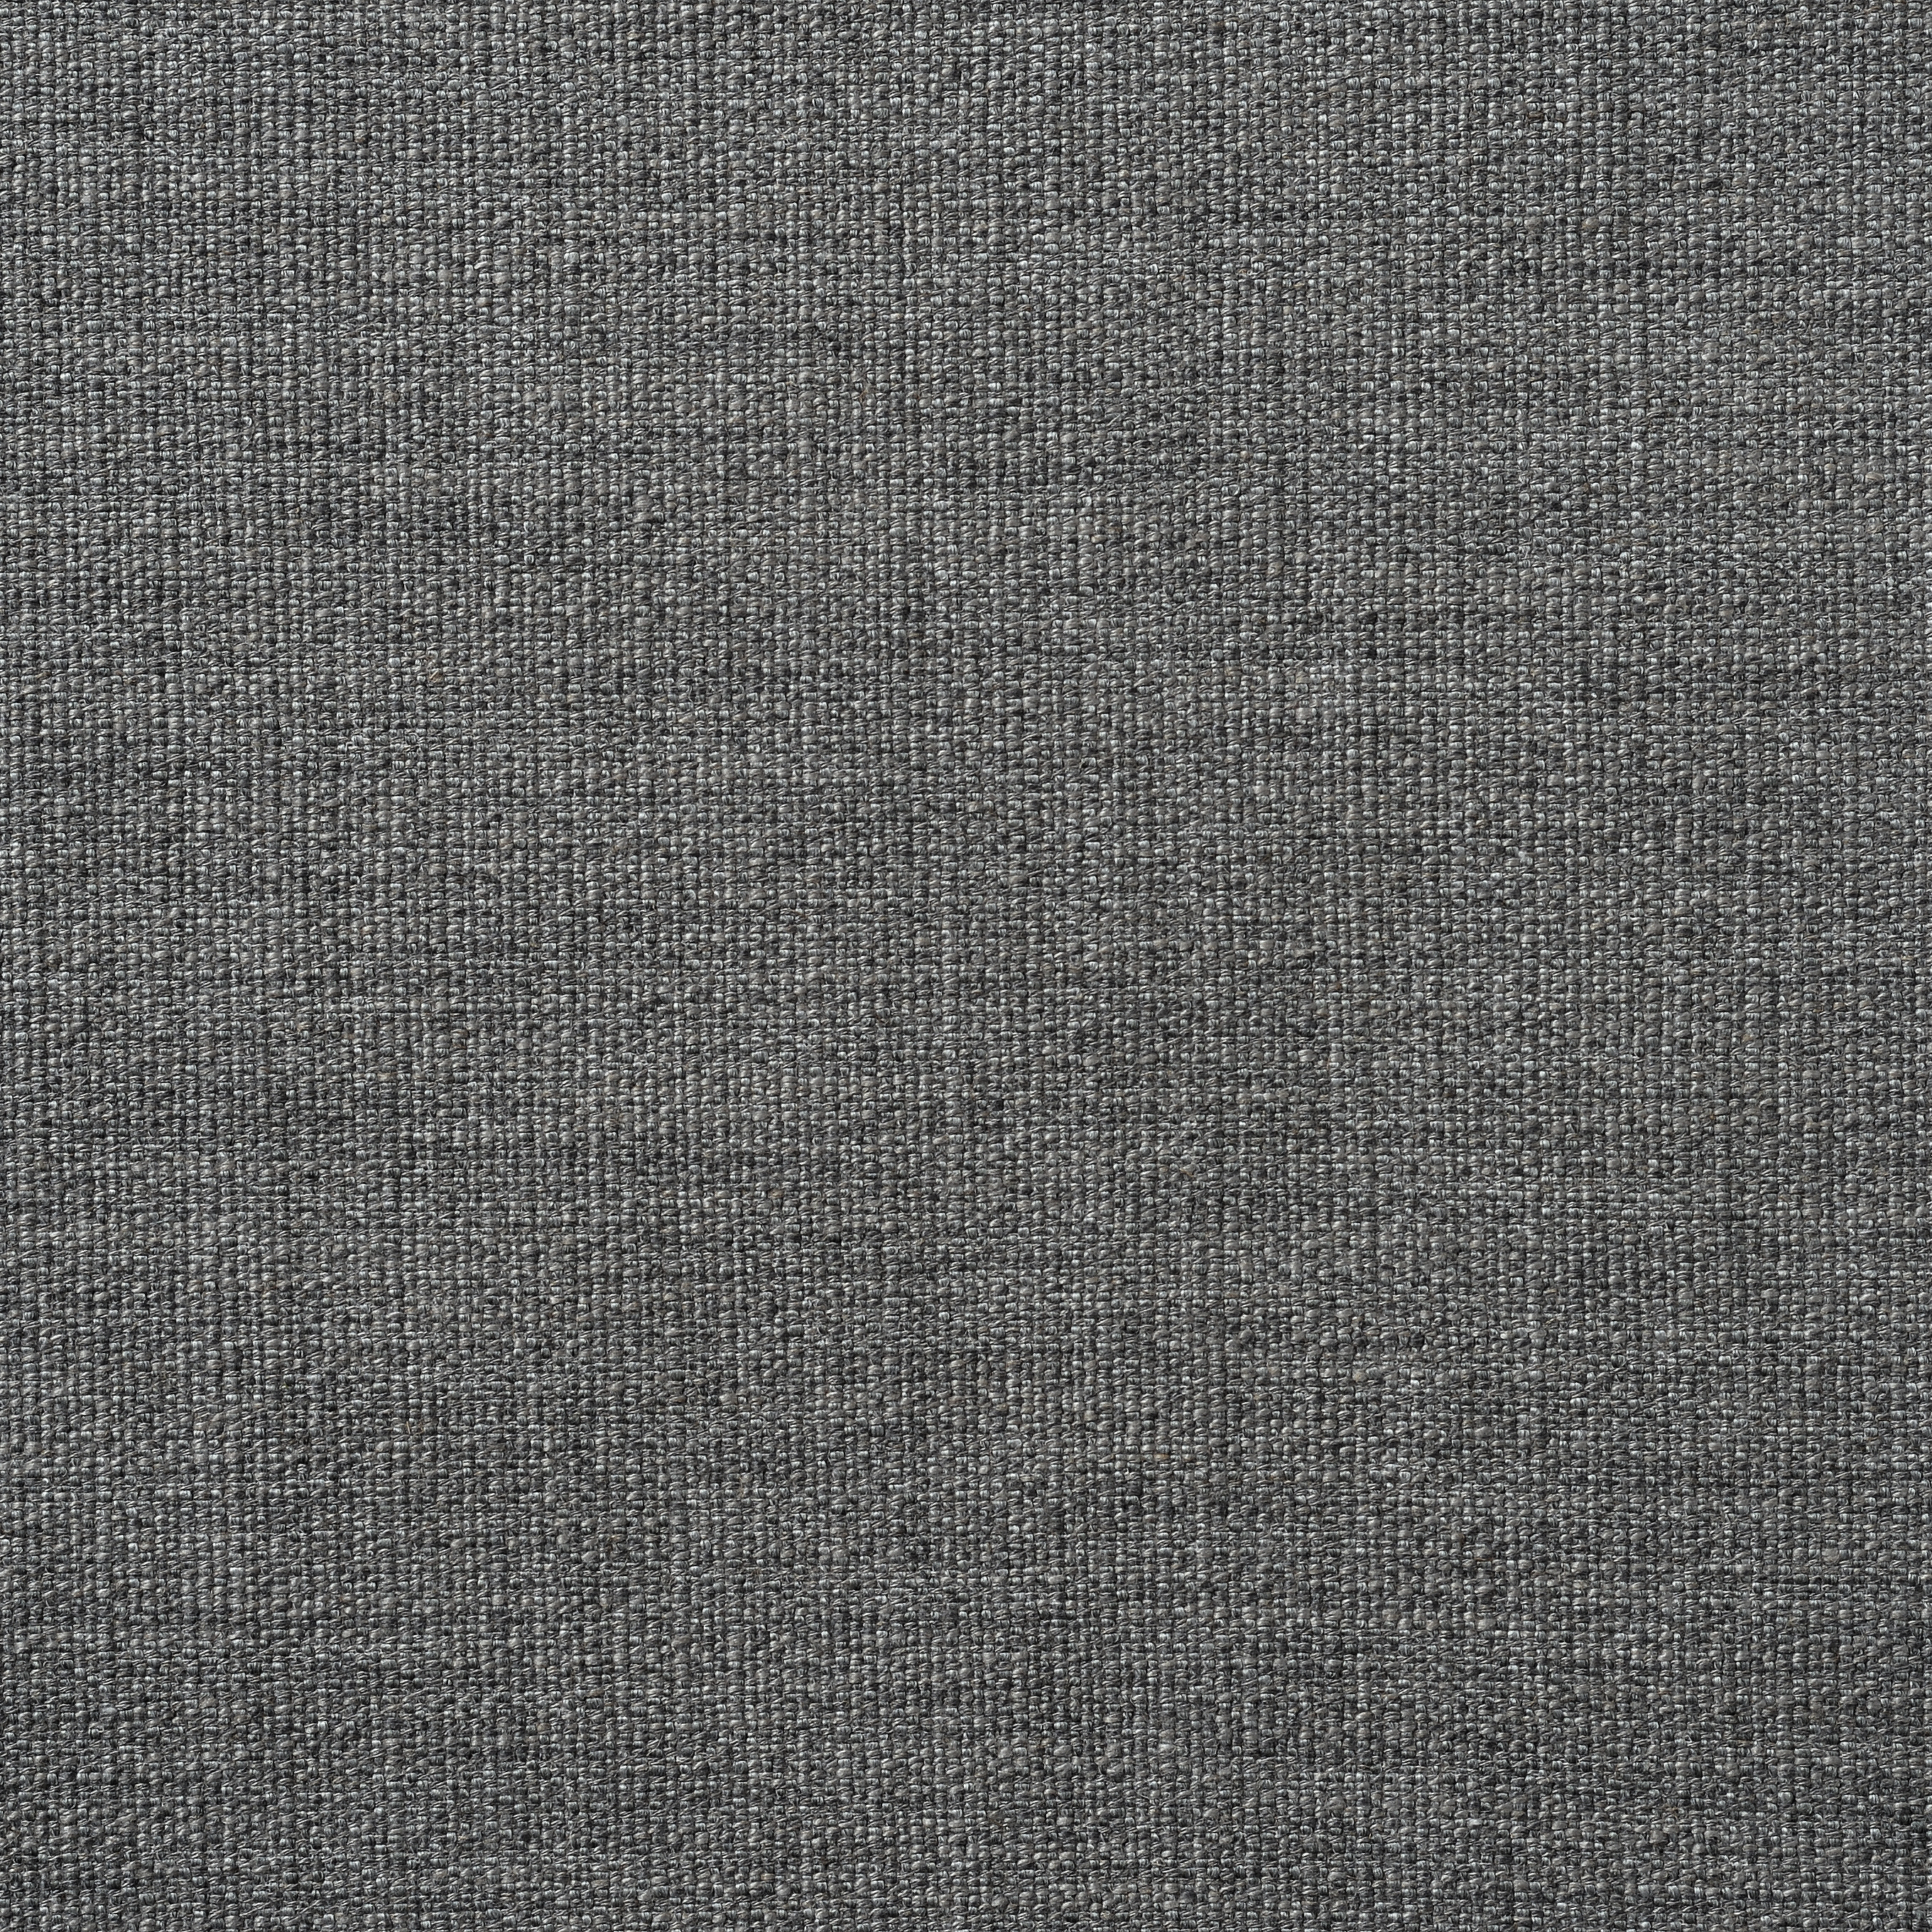 Mitford Rustic Weave - Grey Marl